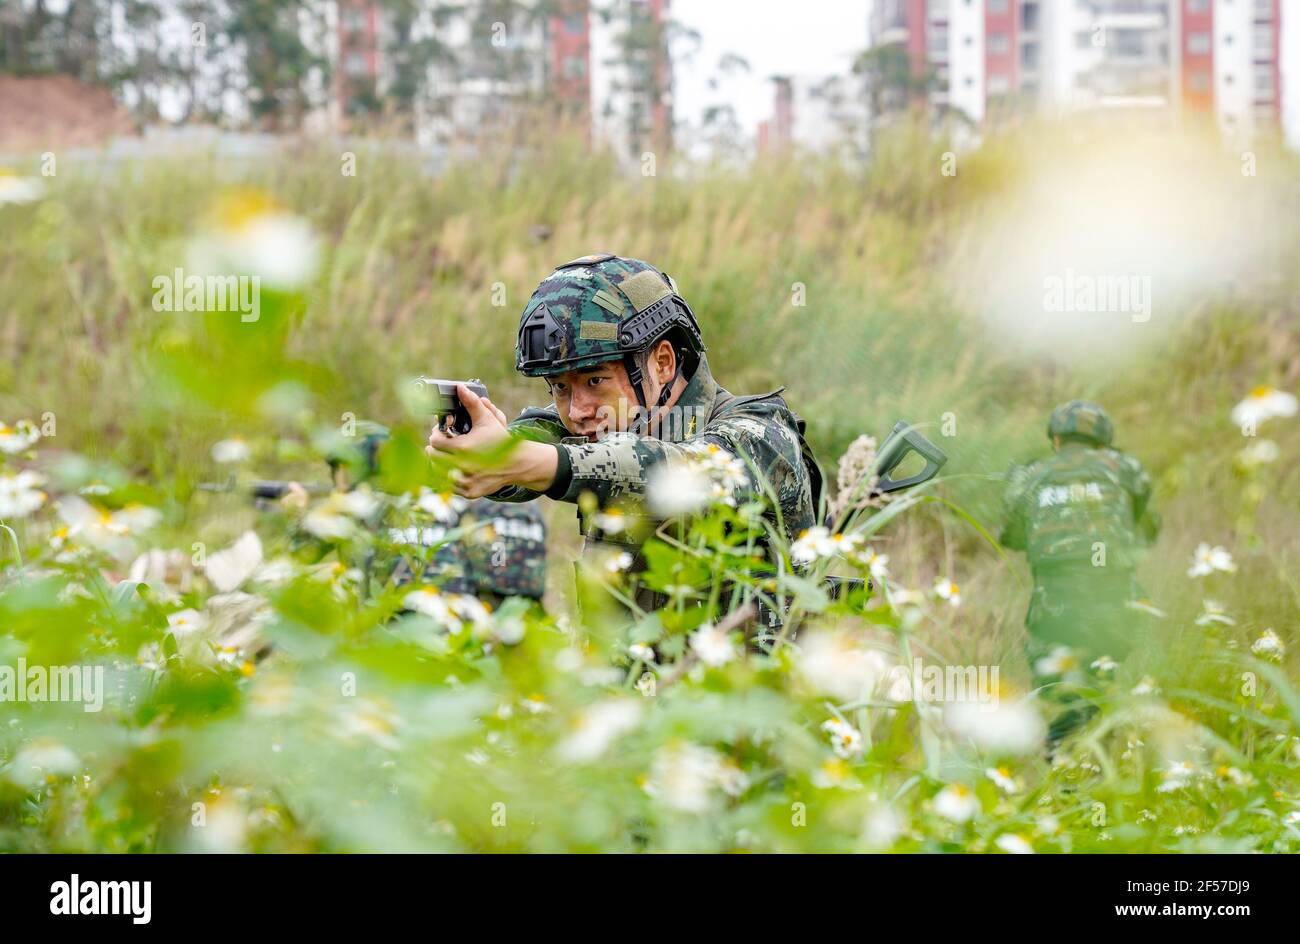 QINZHOU, CHINA - 24. MÄRZ 2021 - EINE Anti-Terror-Ausbildung der bewaffneten Polizei in Qinzhou, Guangxi Zhuang Autonome Region, China, 24. März 2021. (Foto: Chai Hao / Costfoto/Sipa USA) Quelle: SIPA USA/Alamy Live News Stockfoto